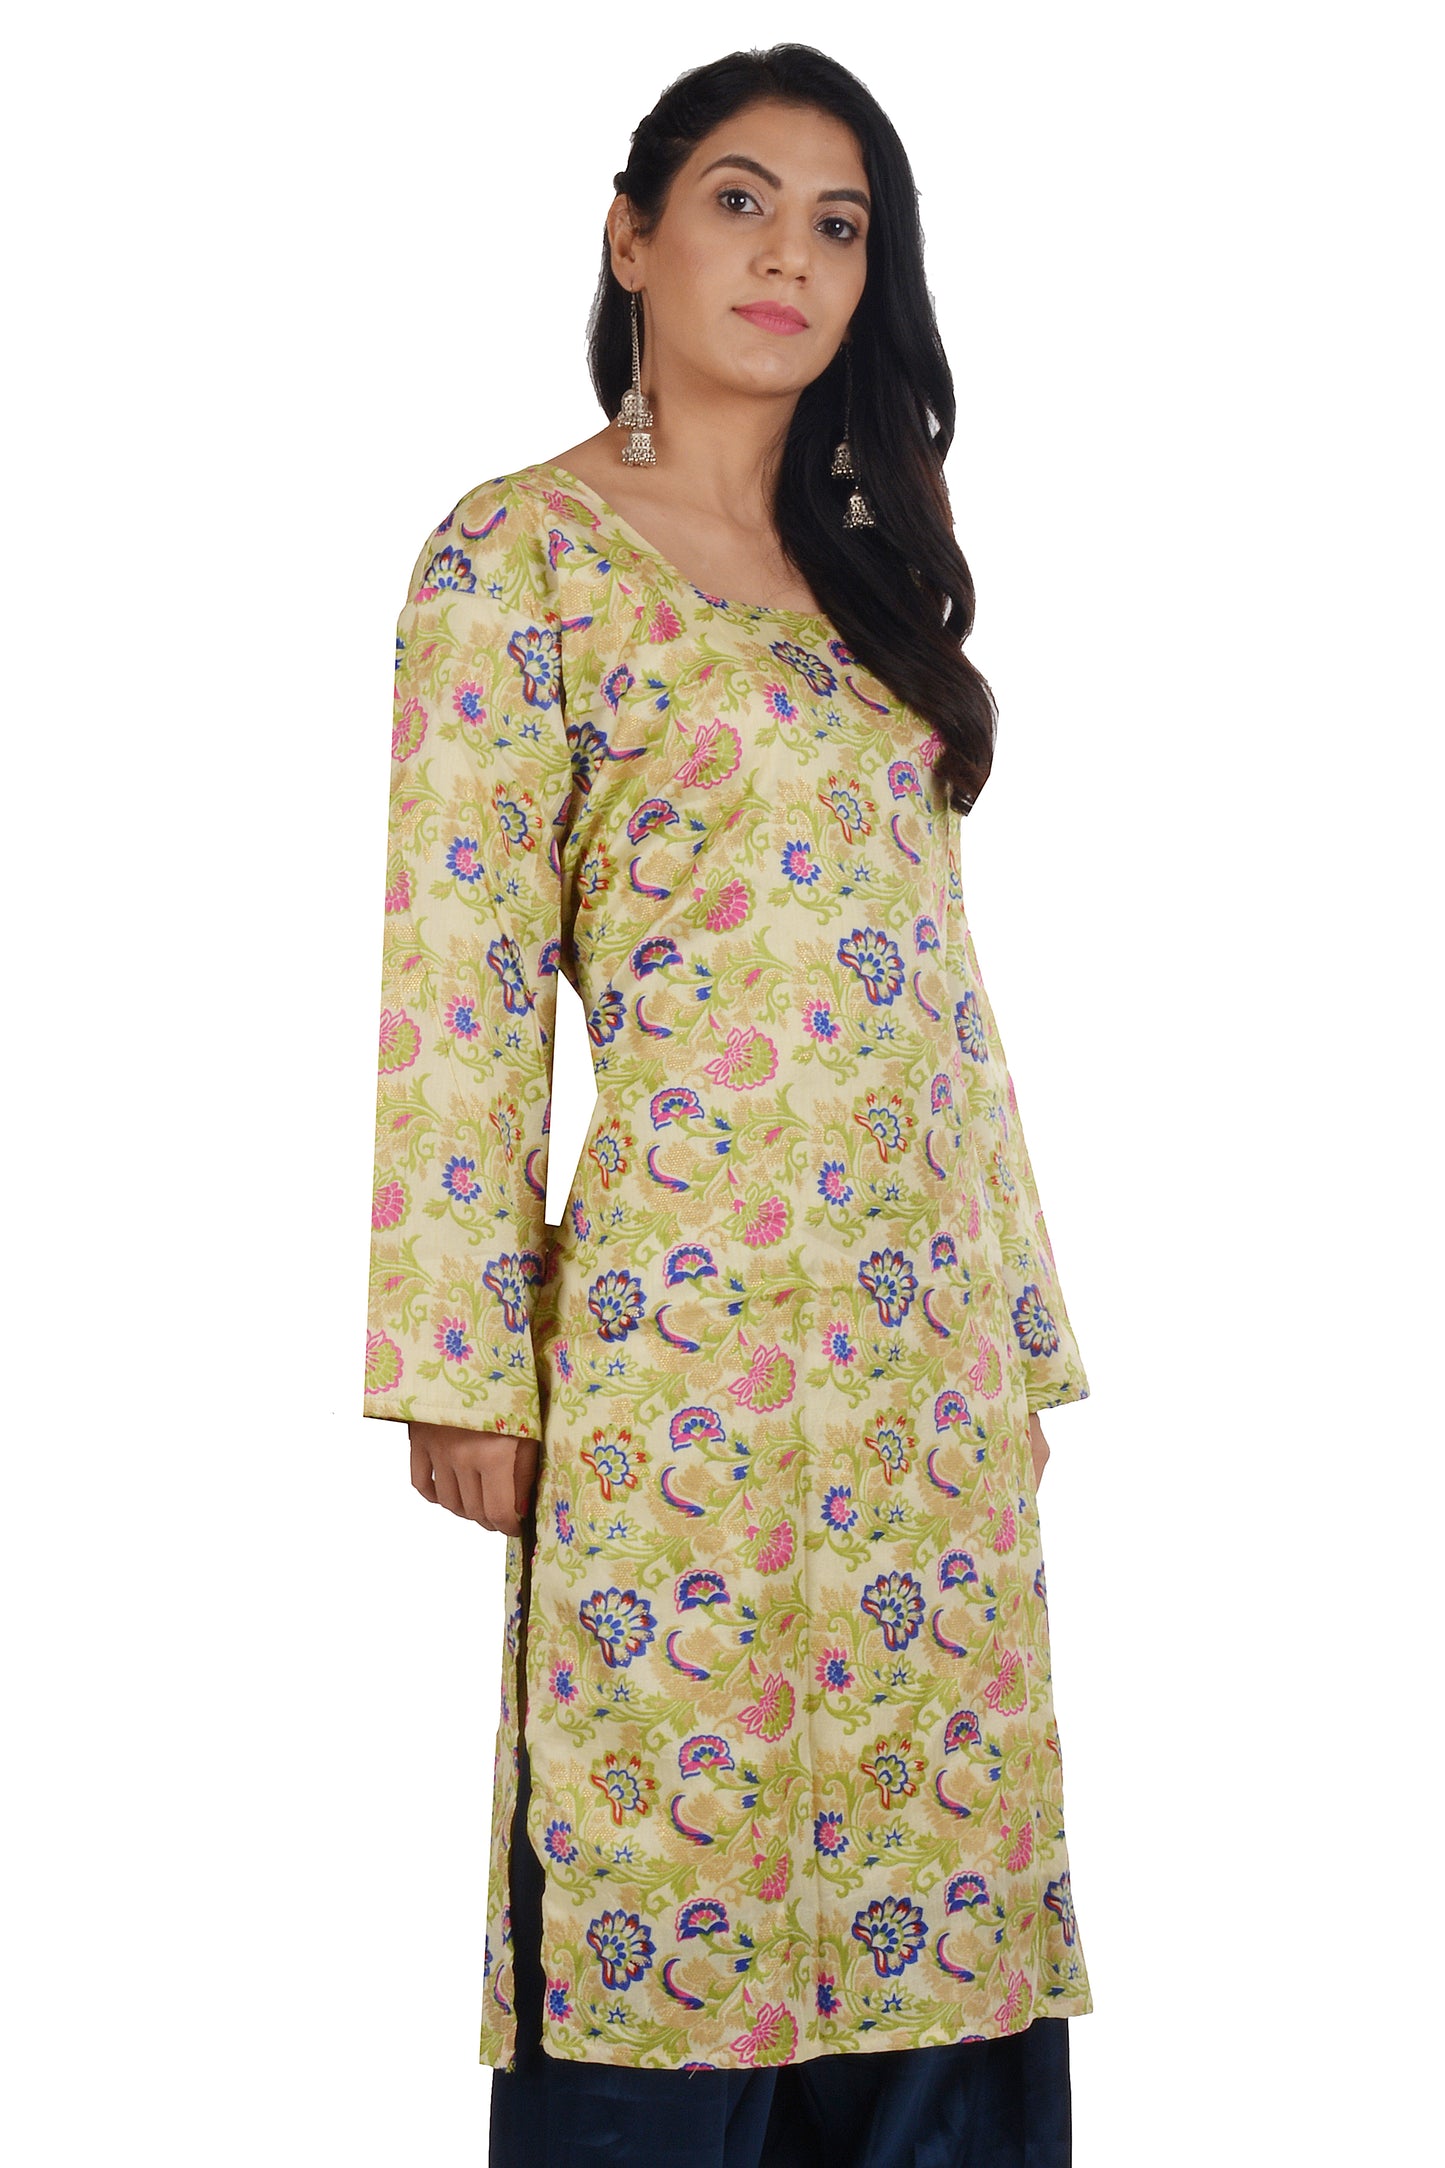 Cream   Indian Wedding party wear Formal Salwar kameez Dress Plus Size 46